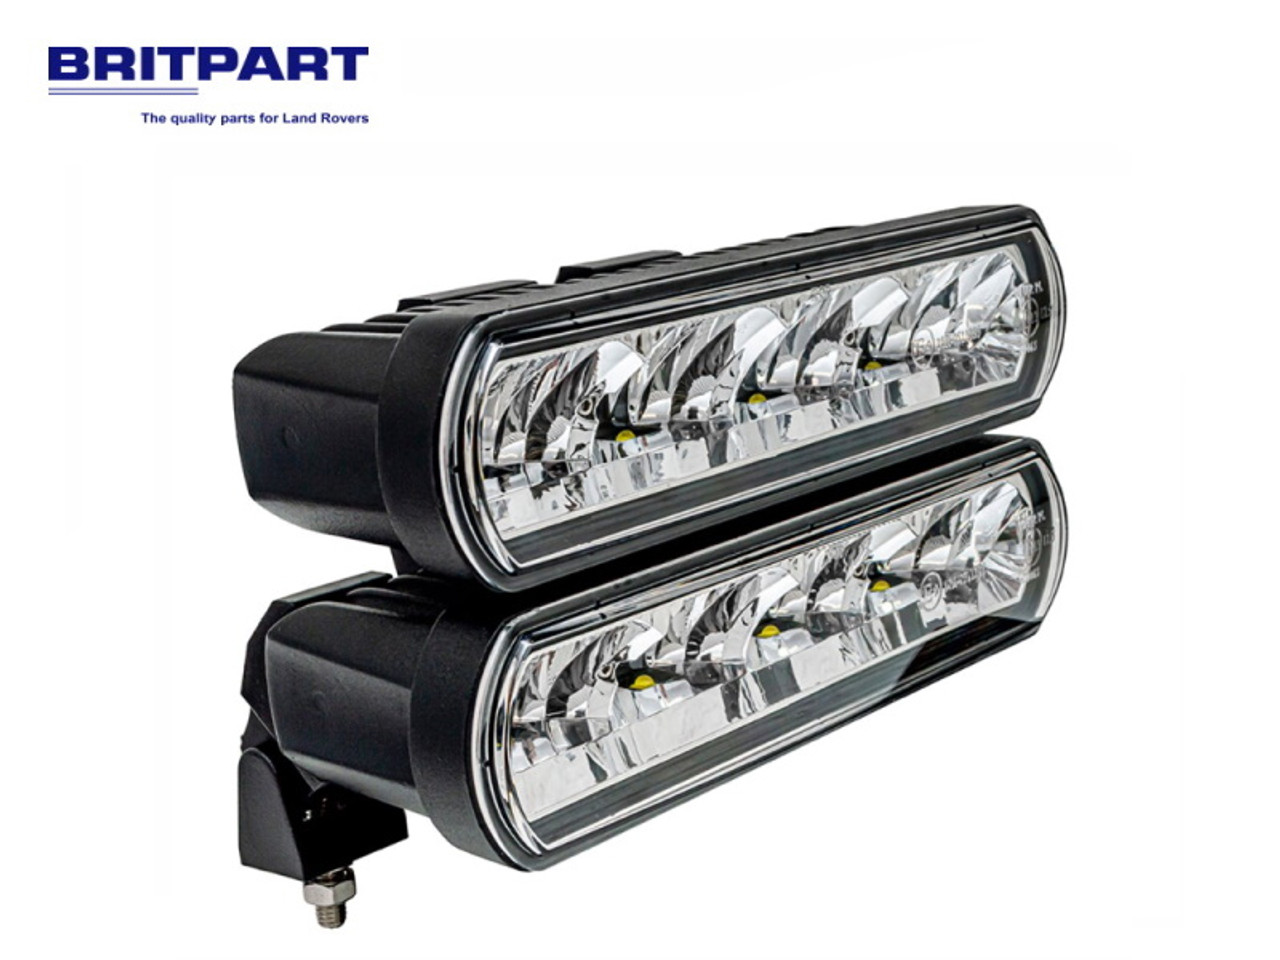 Double LED Driving Light Bar 4 x 10w Cree LEDs - DA3295